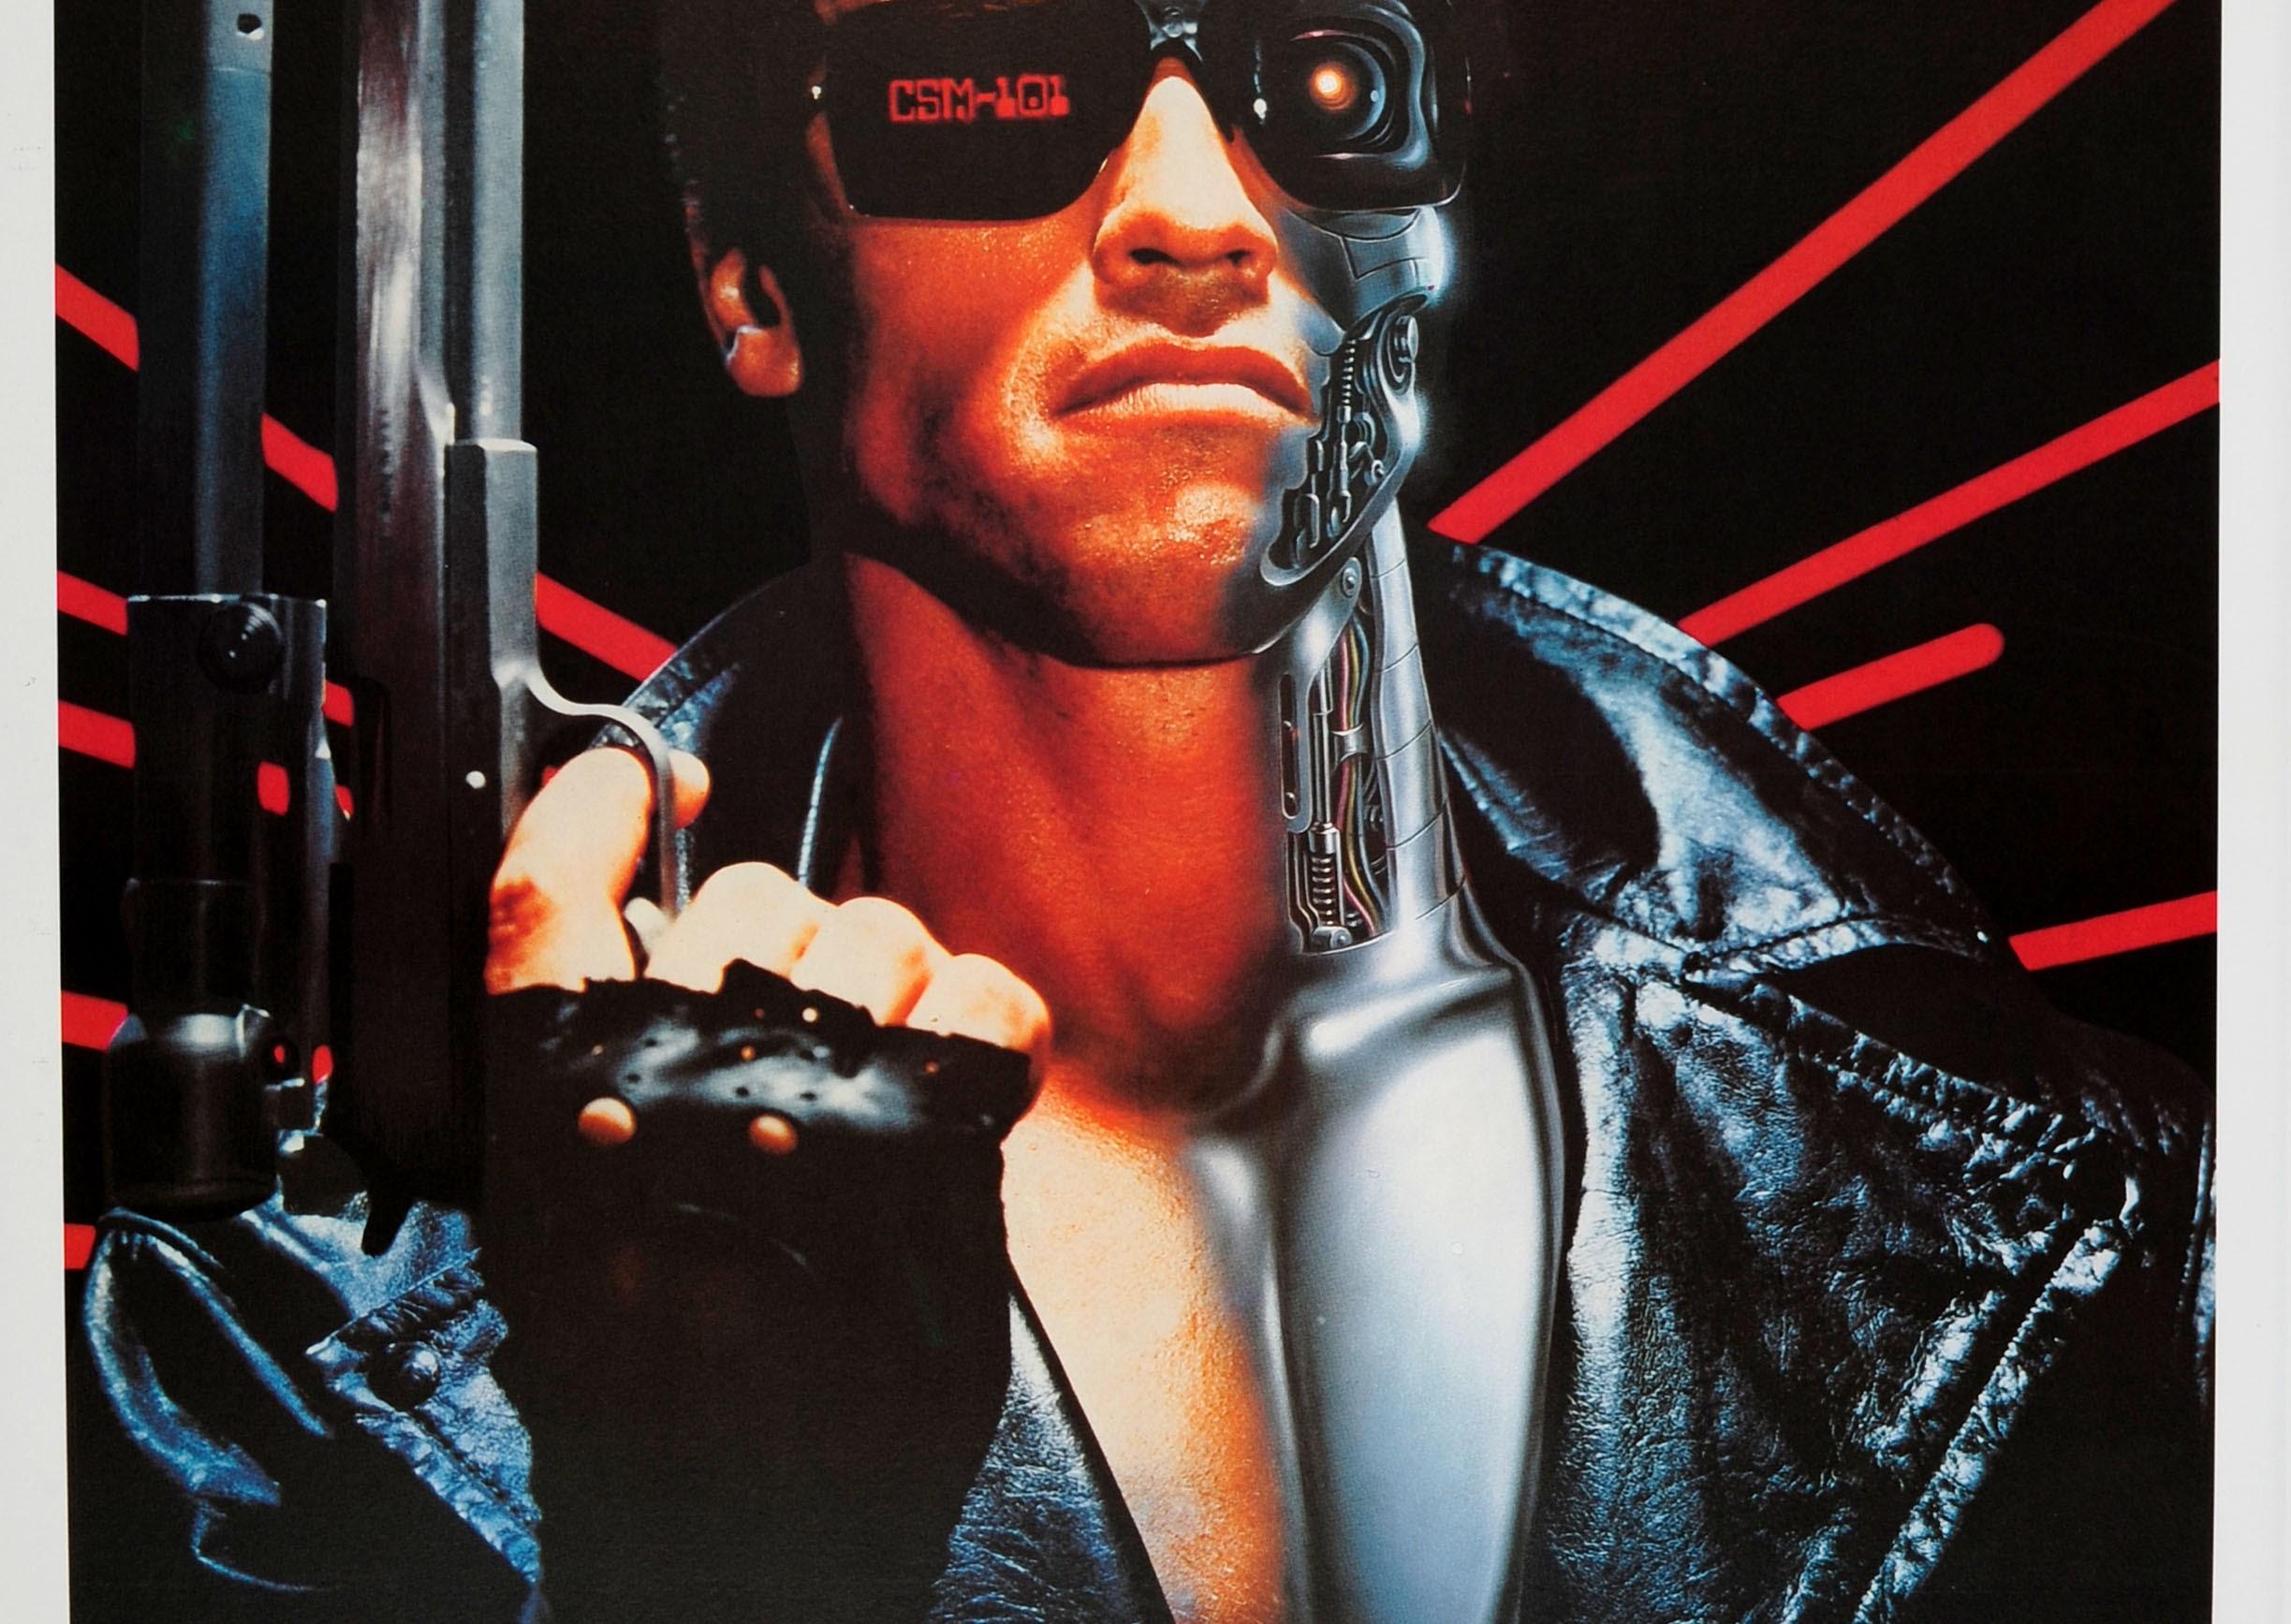 original terminator poster